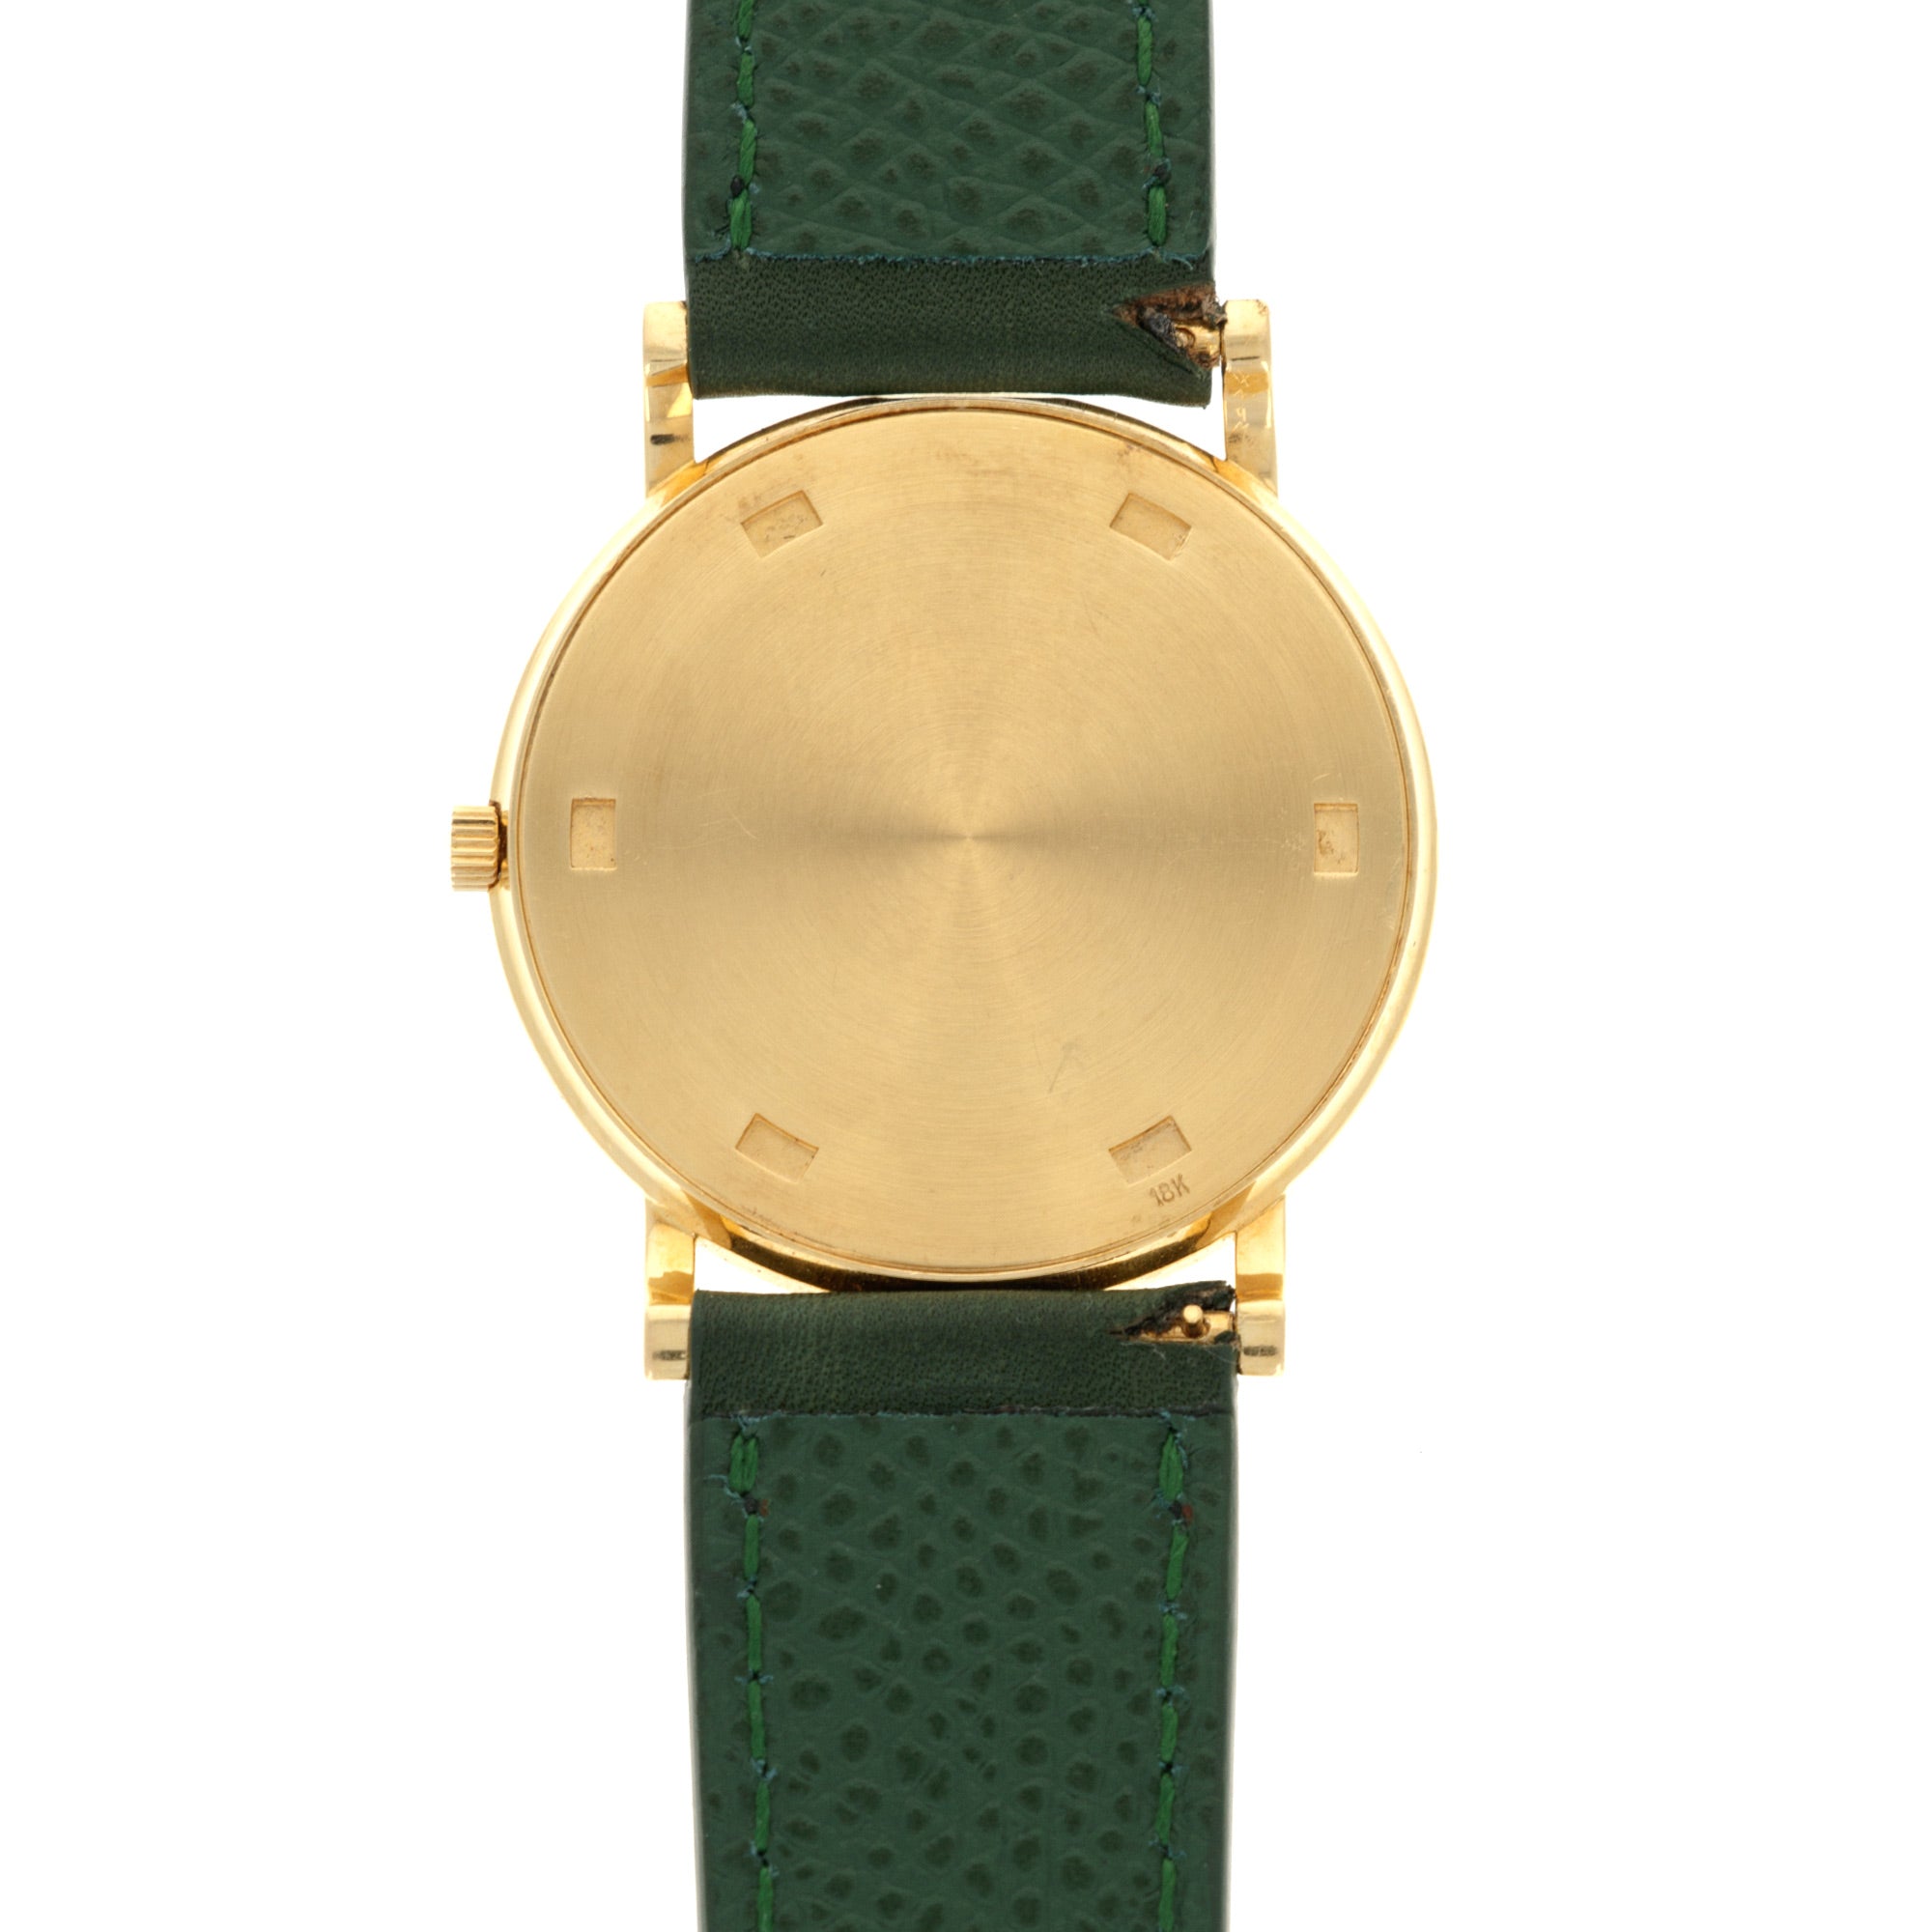 Patek Philippe - Patek Philippe Yellow Gold Calatrava Ref. 3520 Retailed by Tiffany - The Keystone Watches